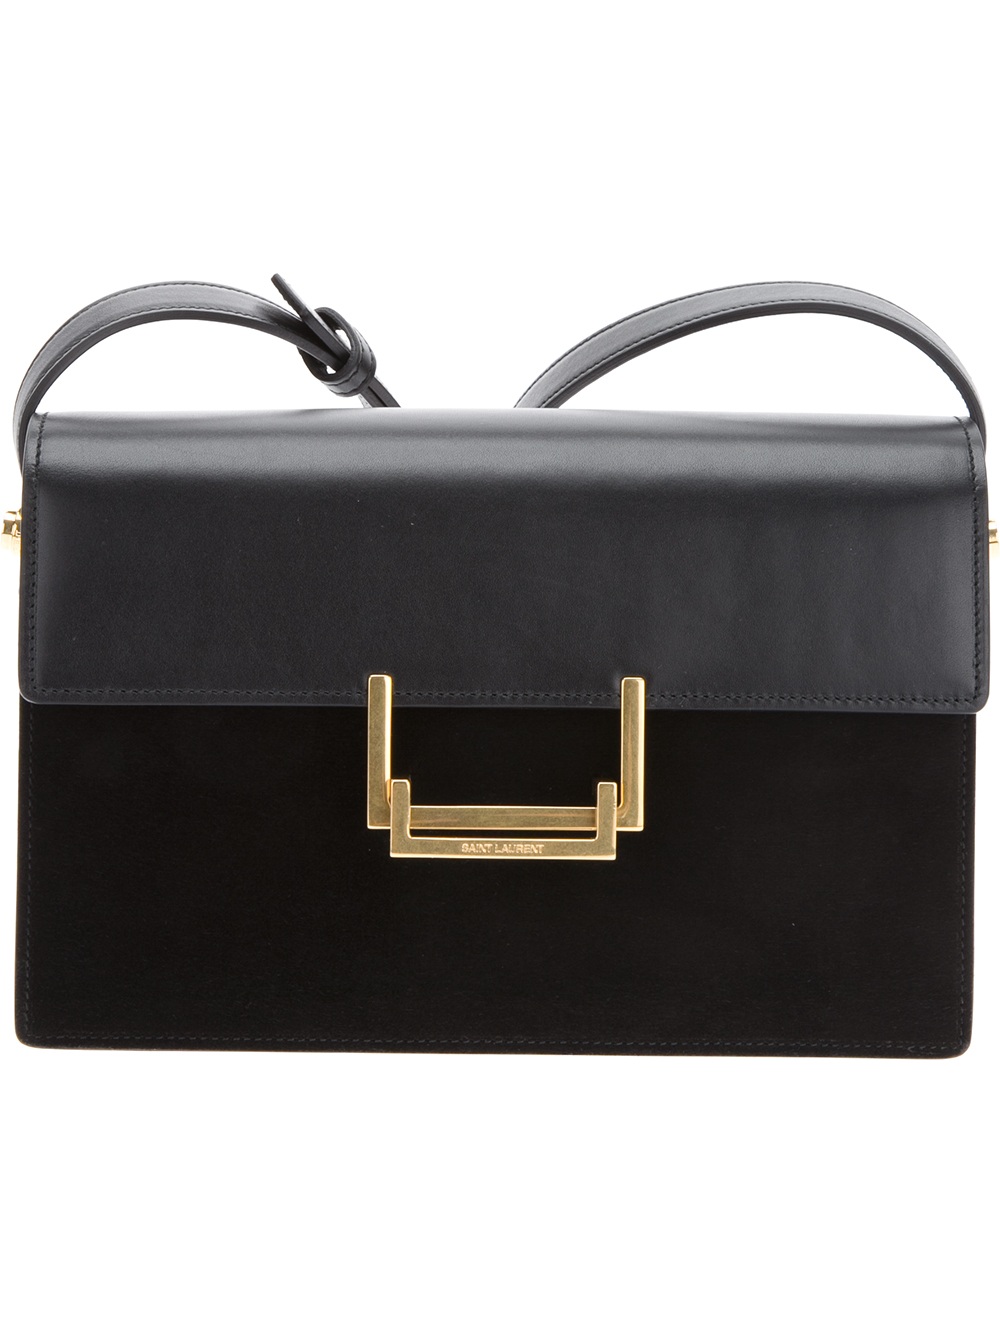 Saint Laurent Lulu Shoulder Bag in Black | Lyst